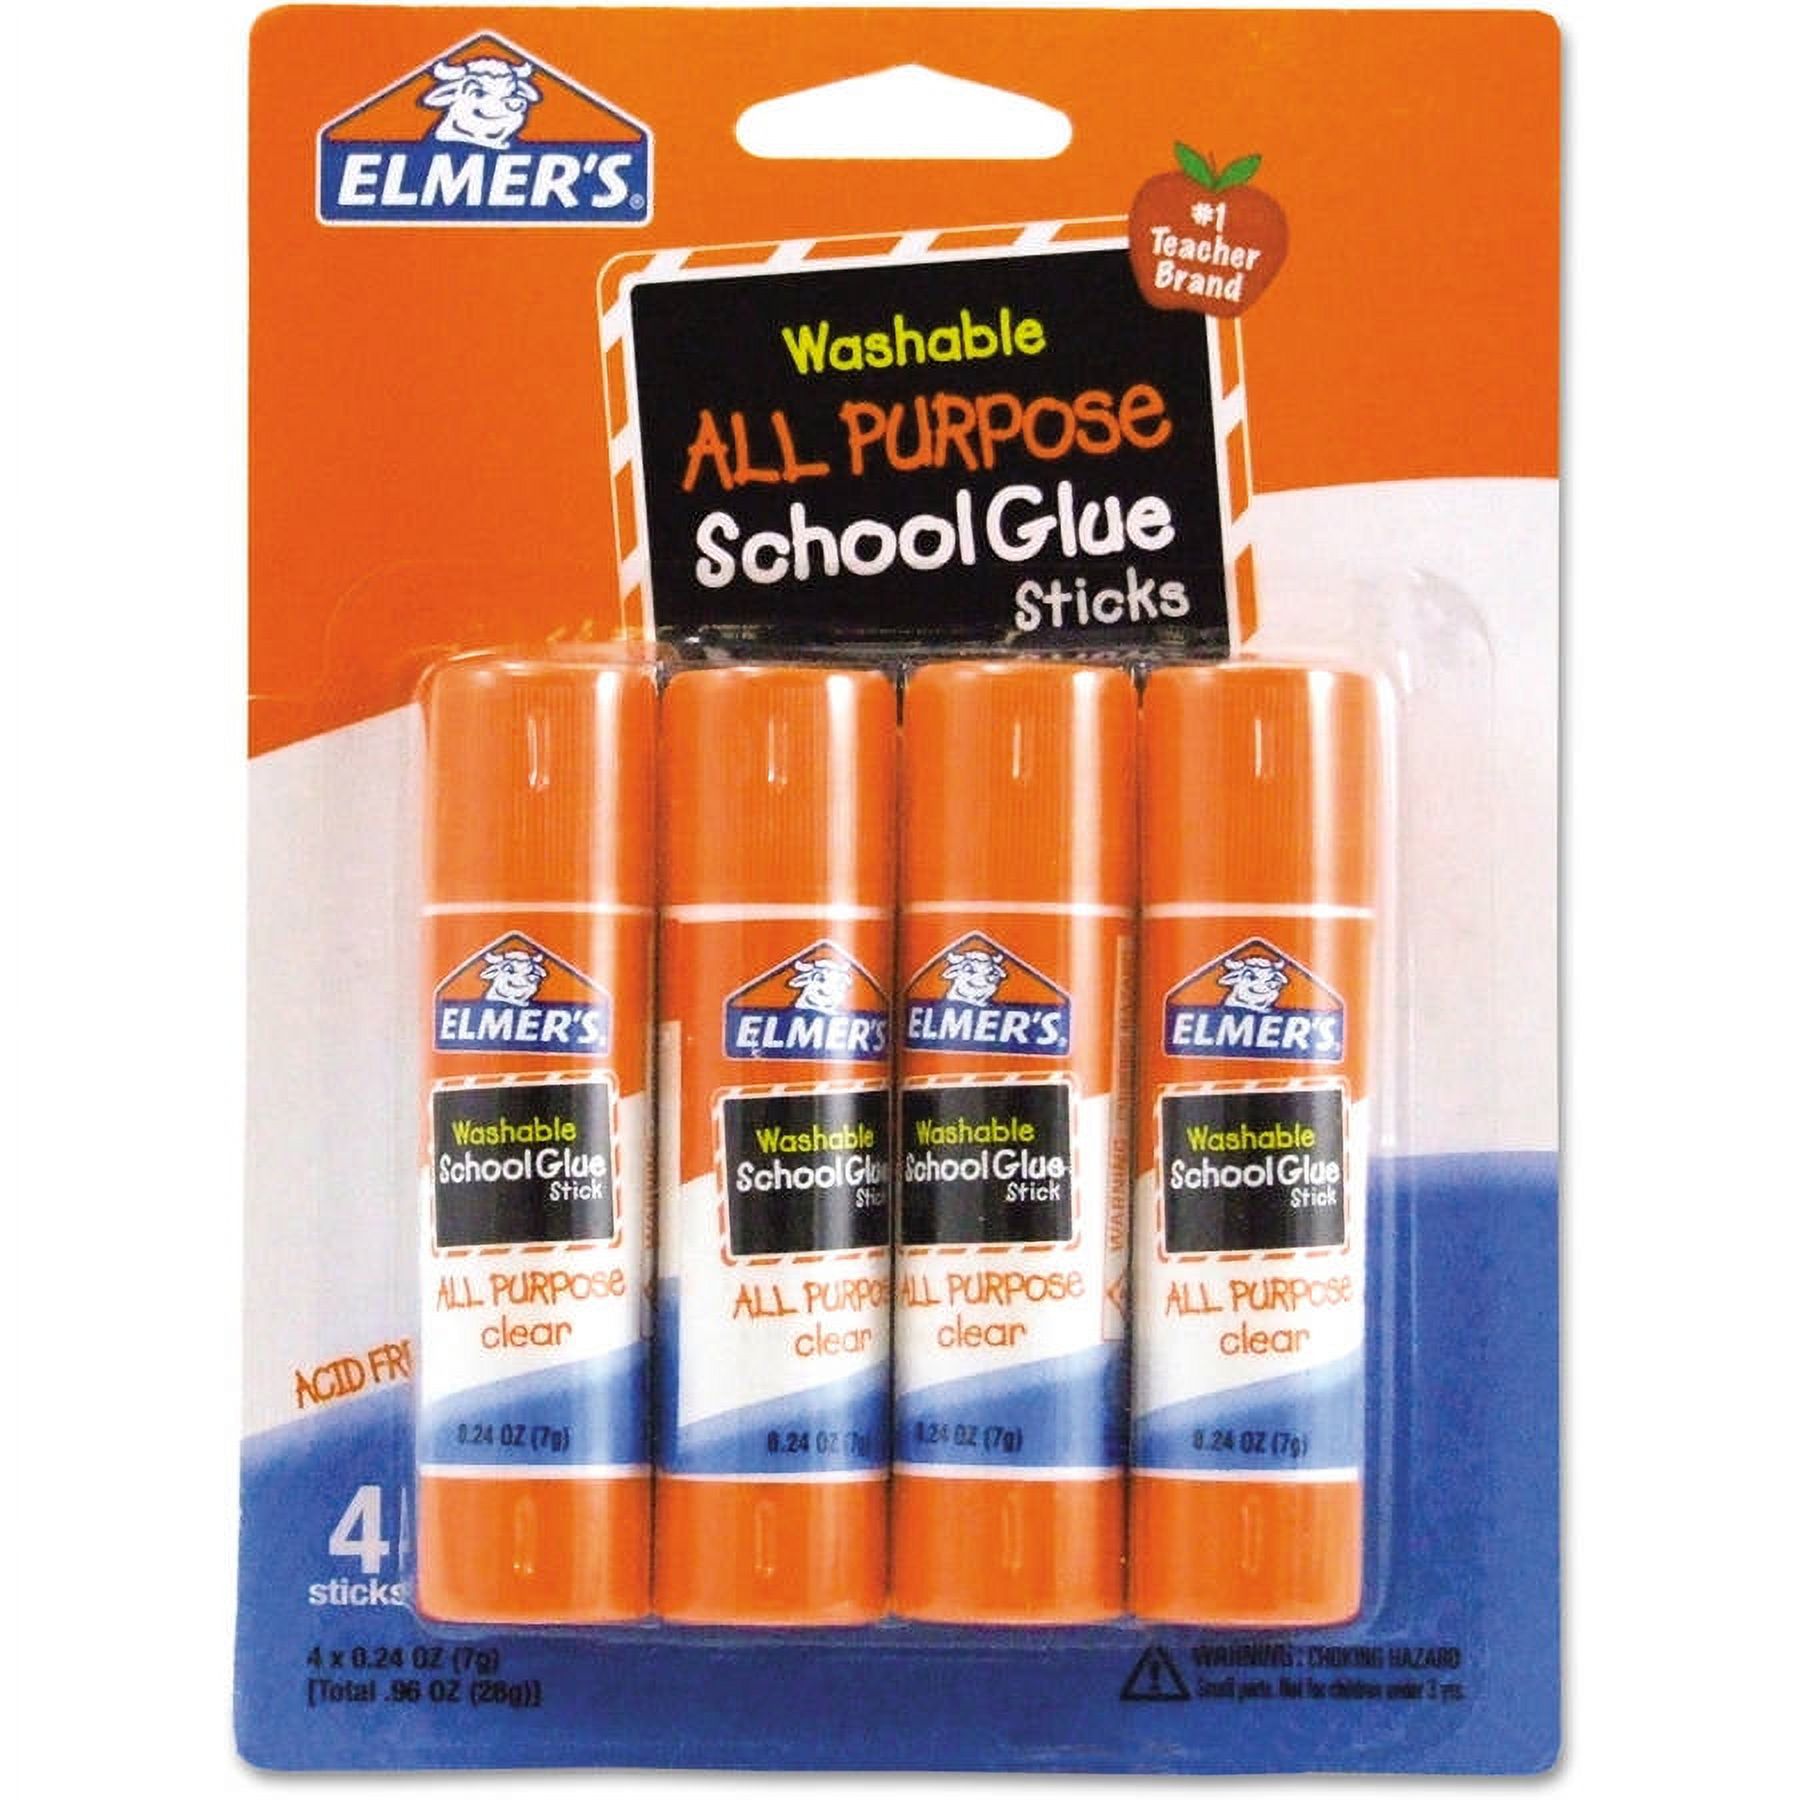 Elmer's Washable School Glue Sticks, .24 oz, 4pk - image 1 of 6